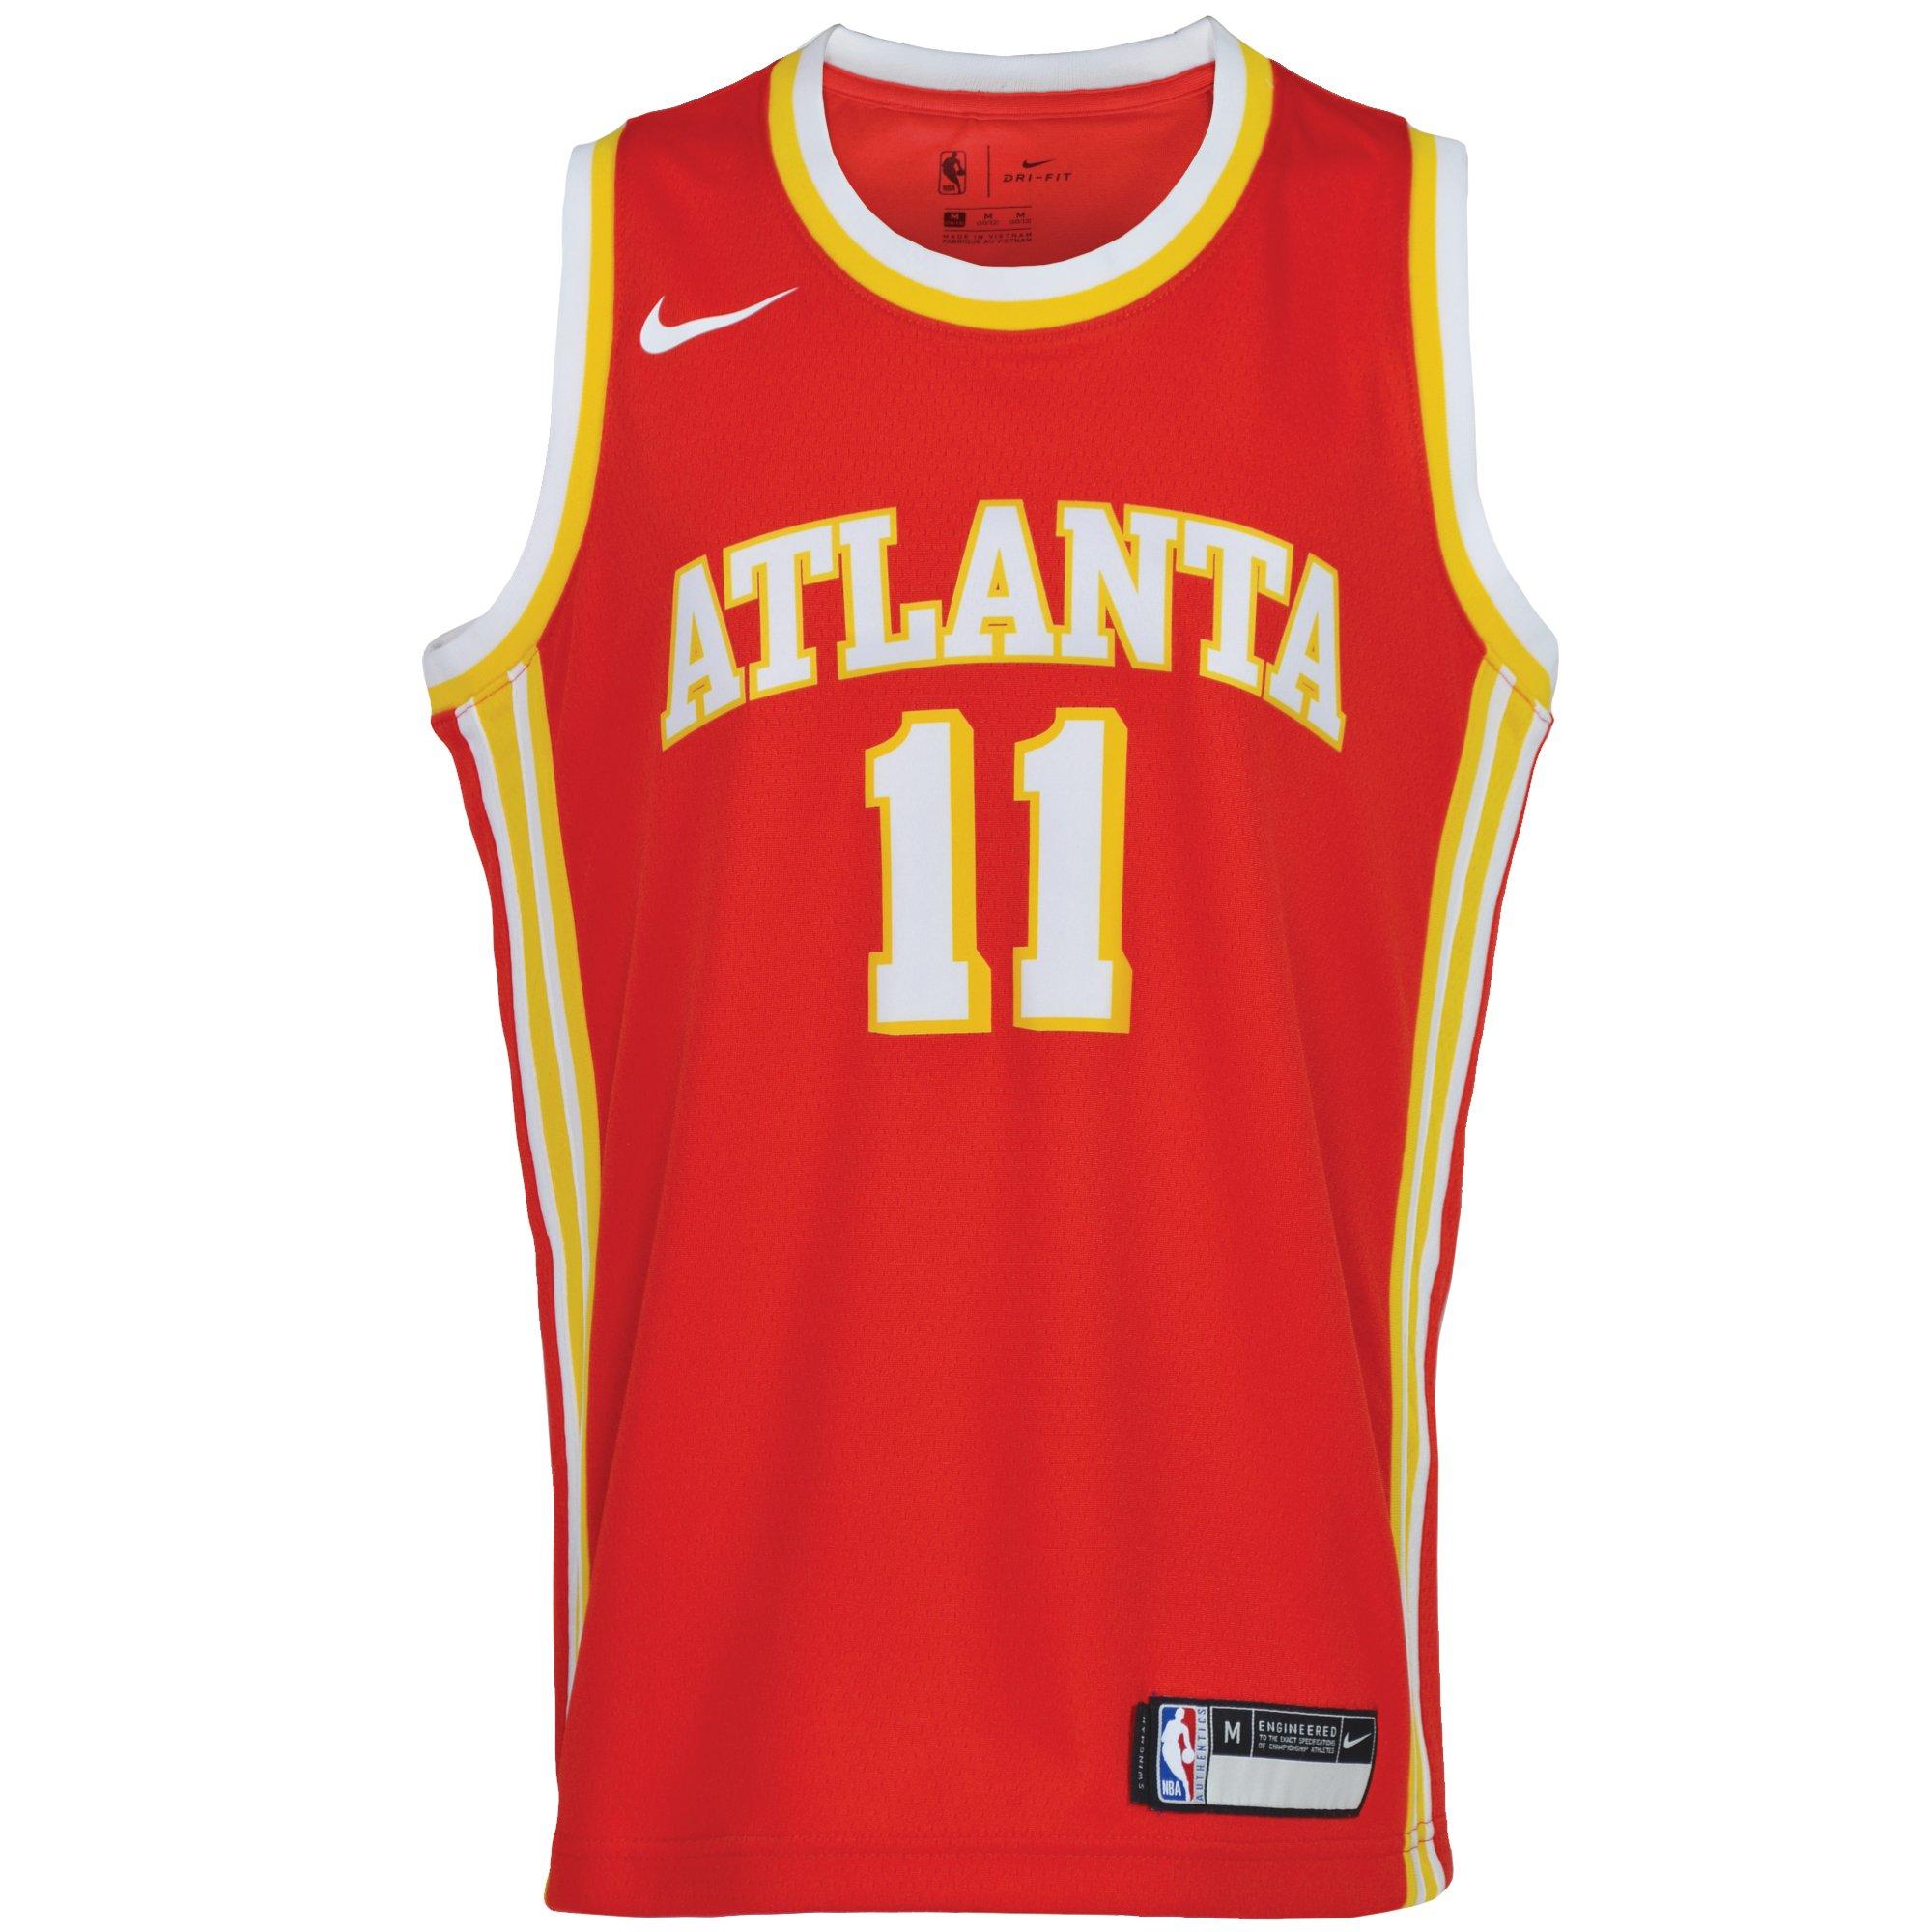 Order your Atlanta Hawks Nike City Edition gear today